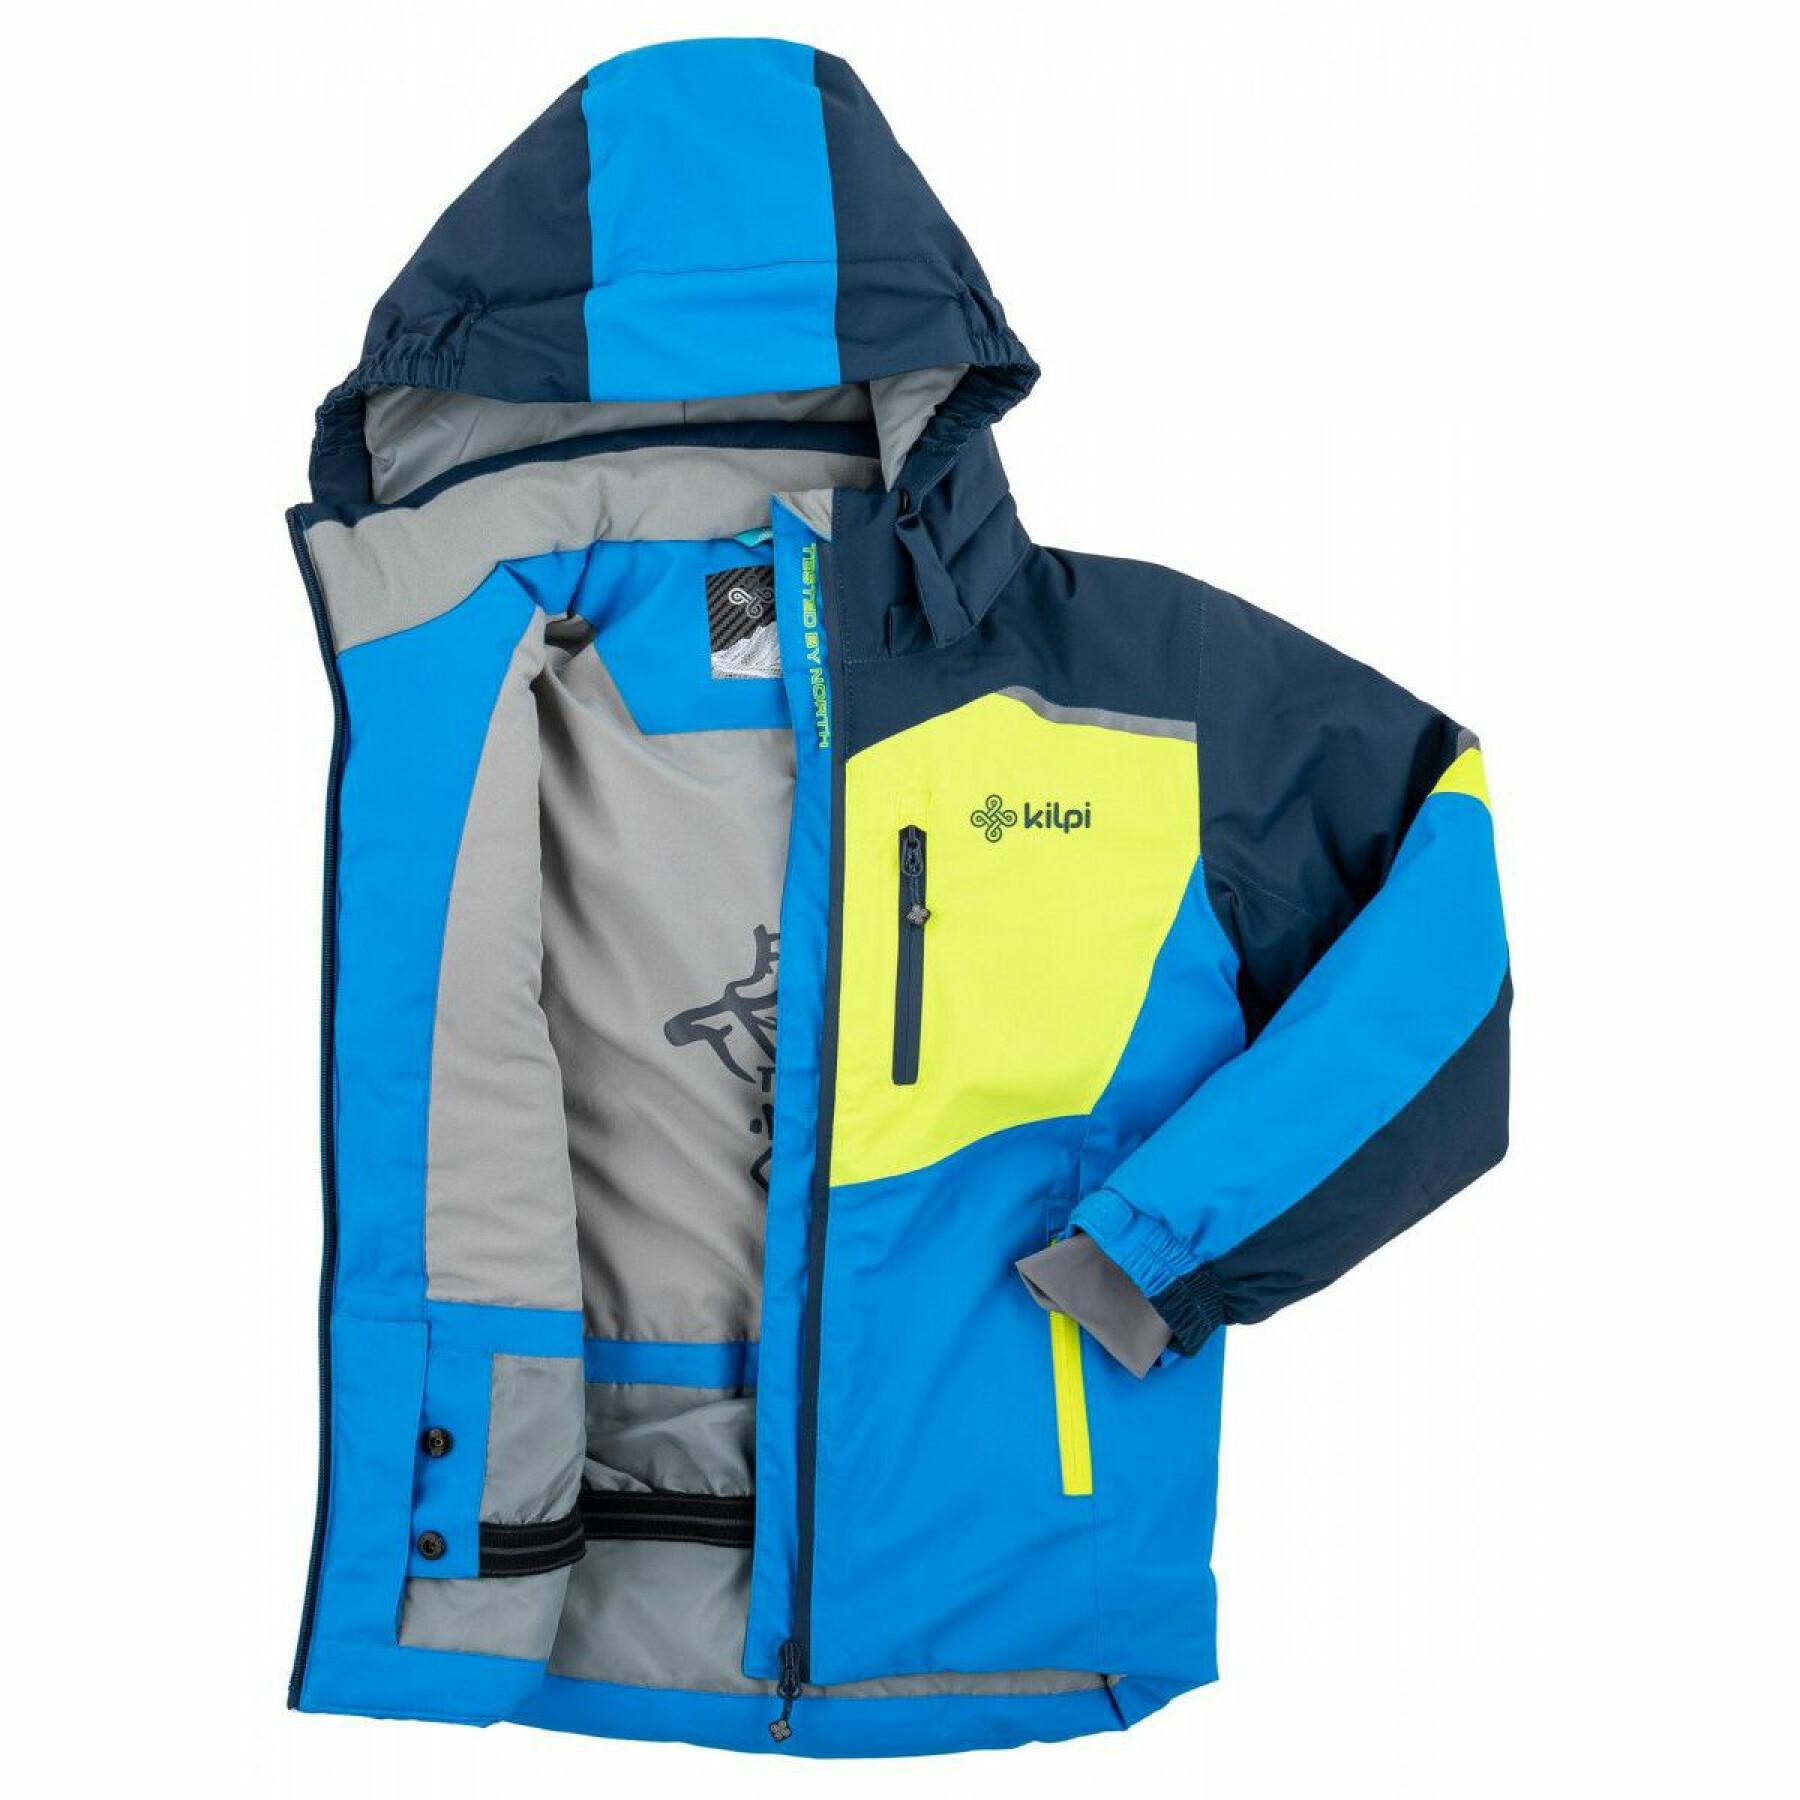 Children's ski jacket Kilpi Ferden